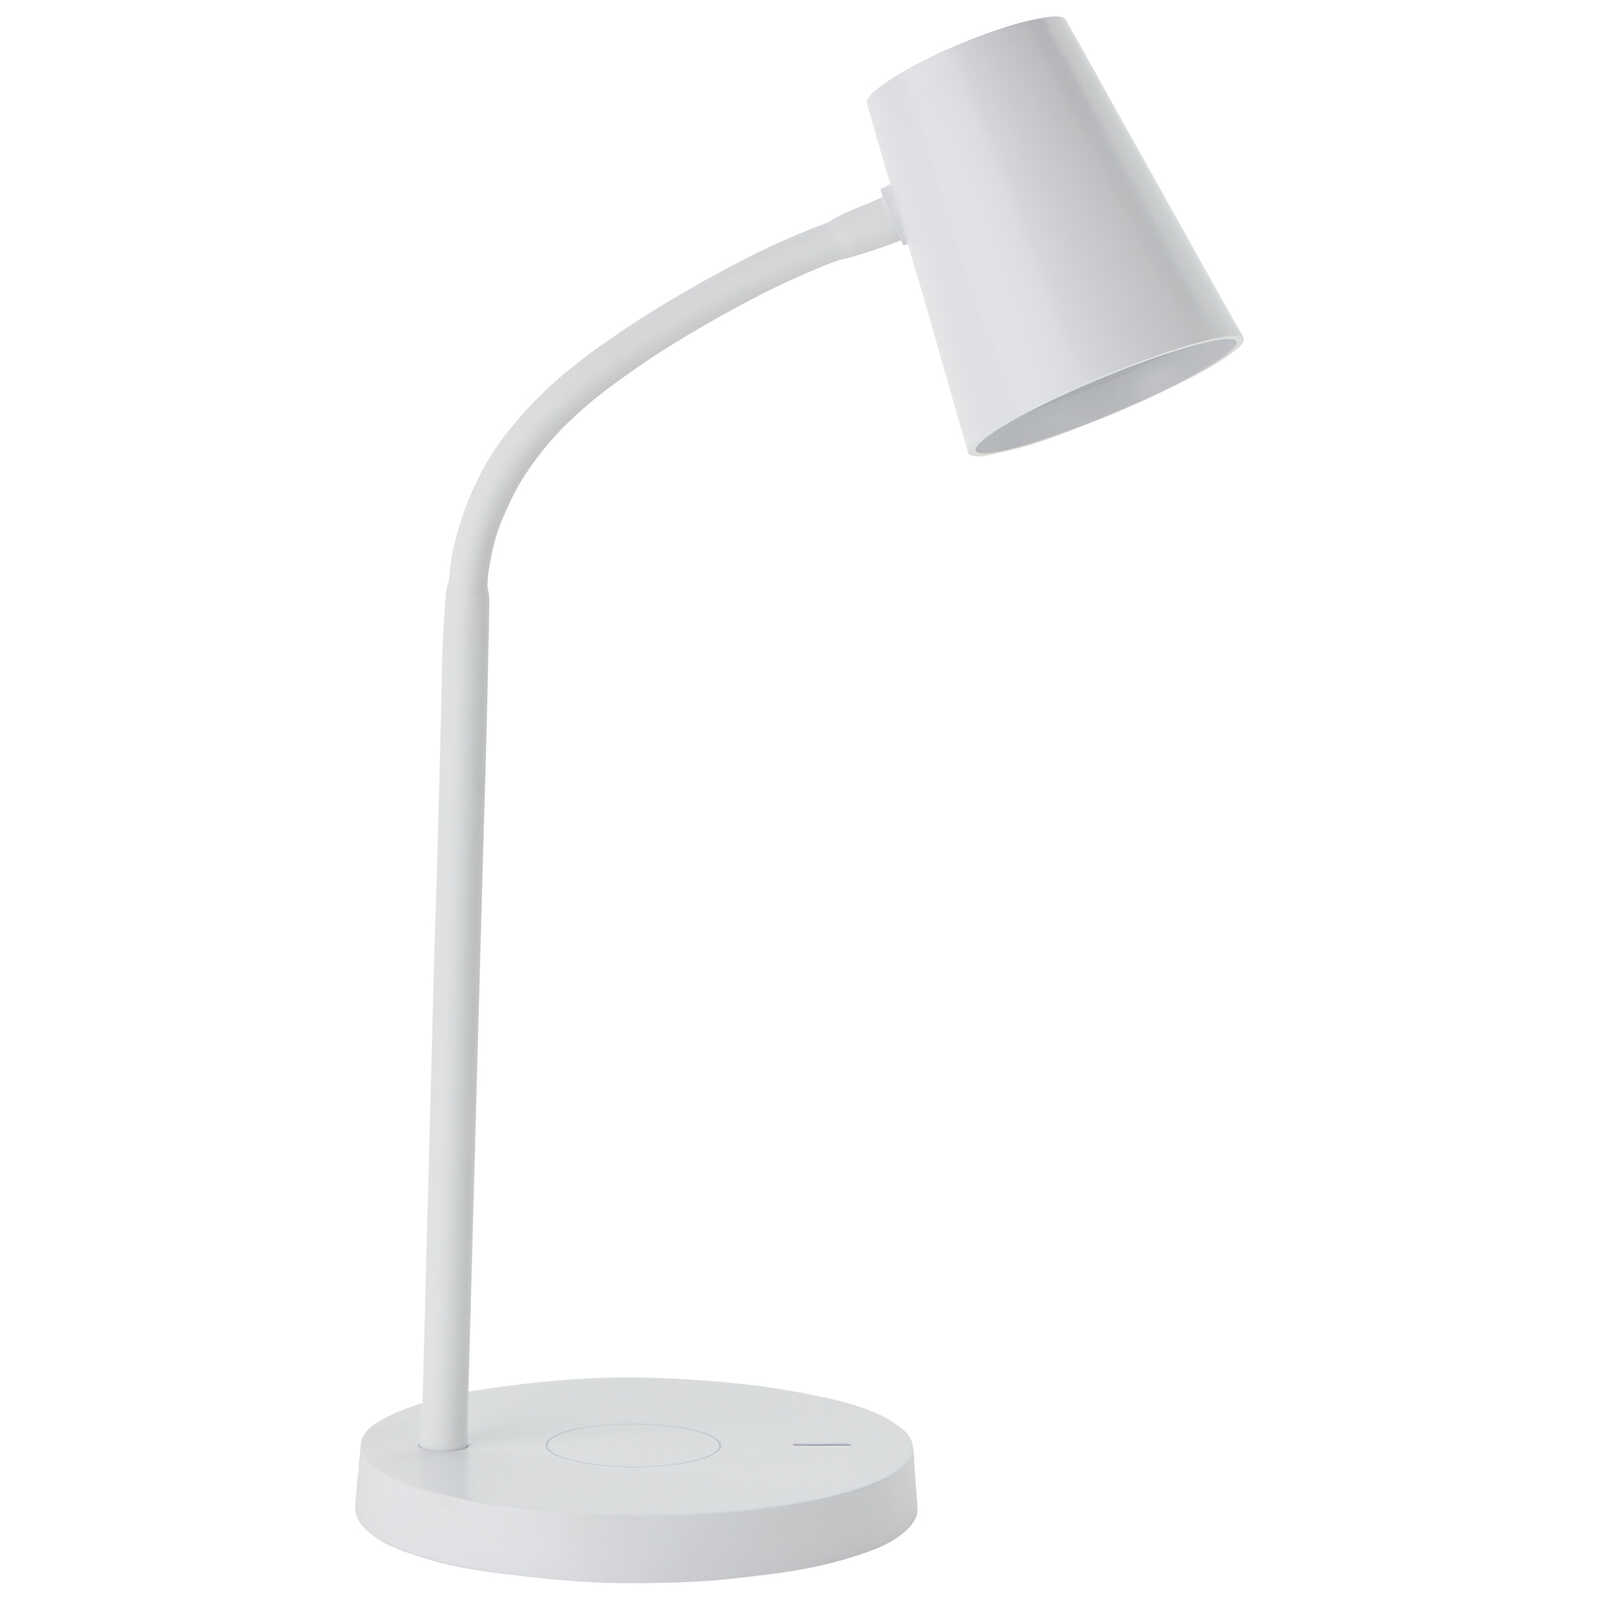             Plastic table lamp - Jannik - White
        